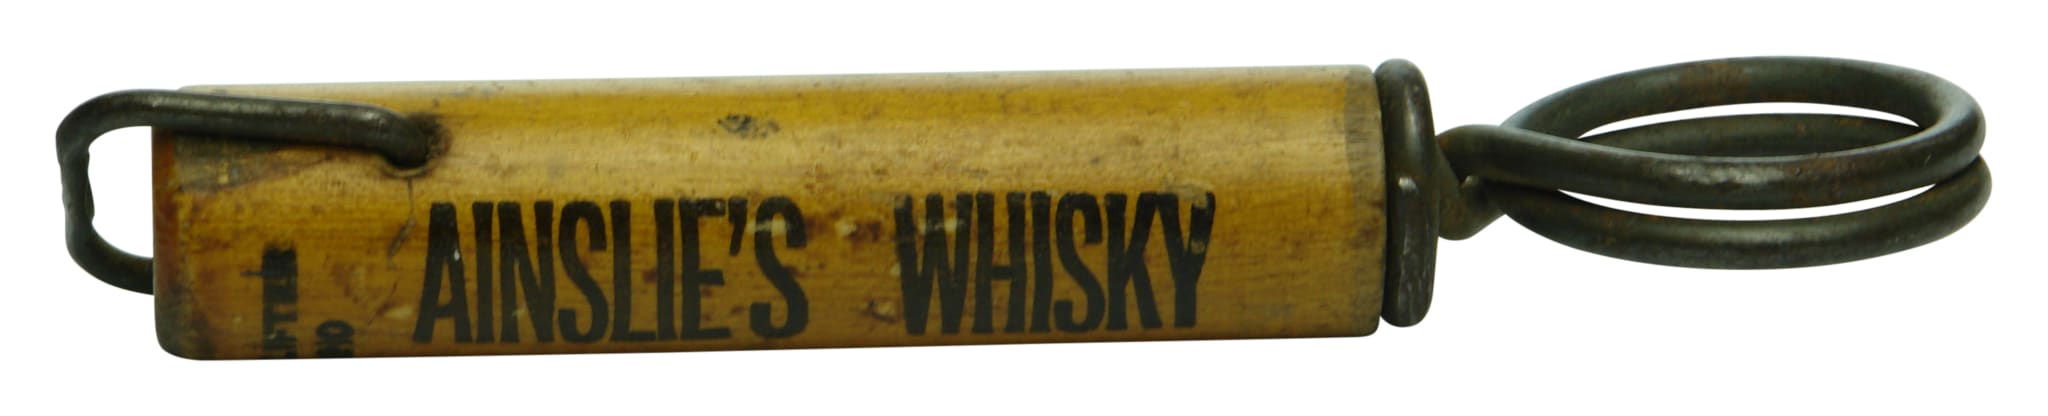 Ainslie's Whisky Advertising Corkscrew Crown Seal Opener